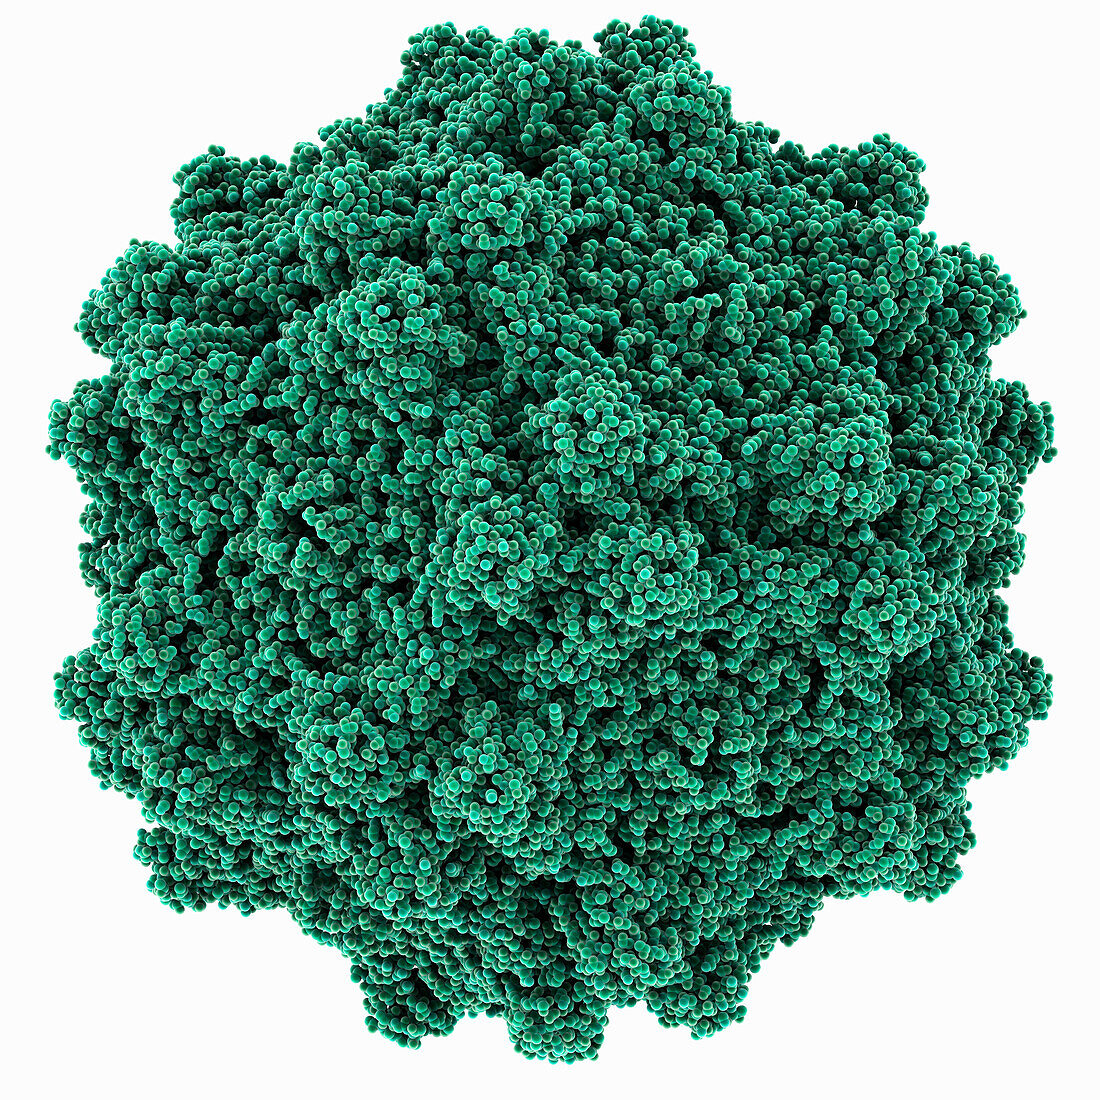 Adeno-associated virus serotype 4 capsid, molecular model